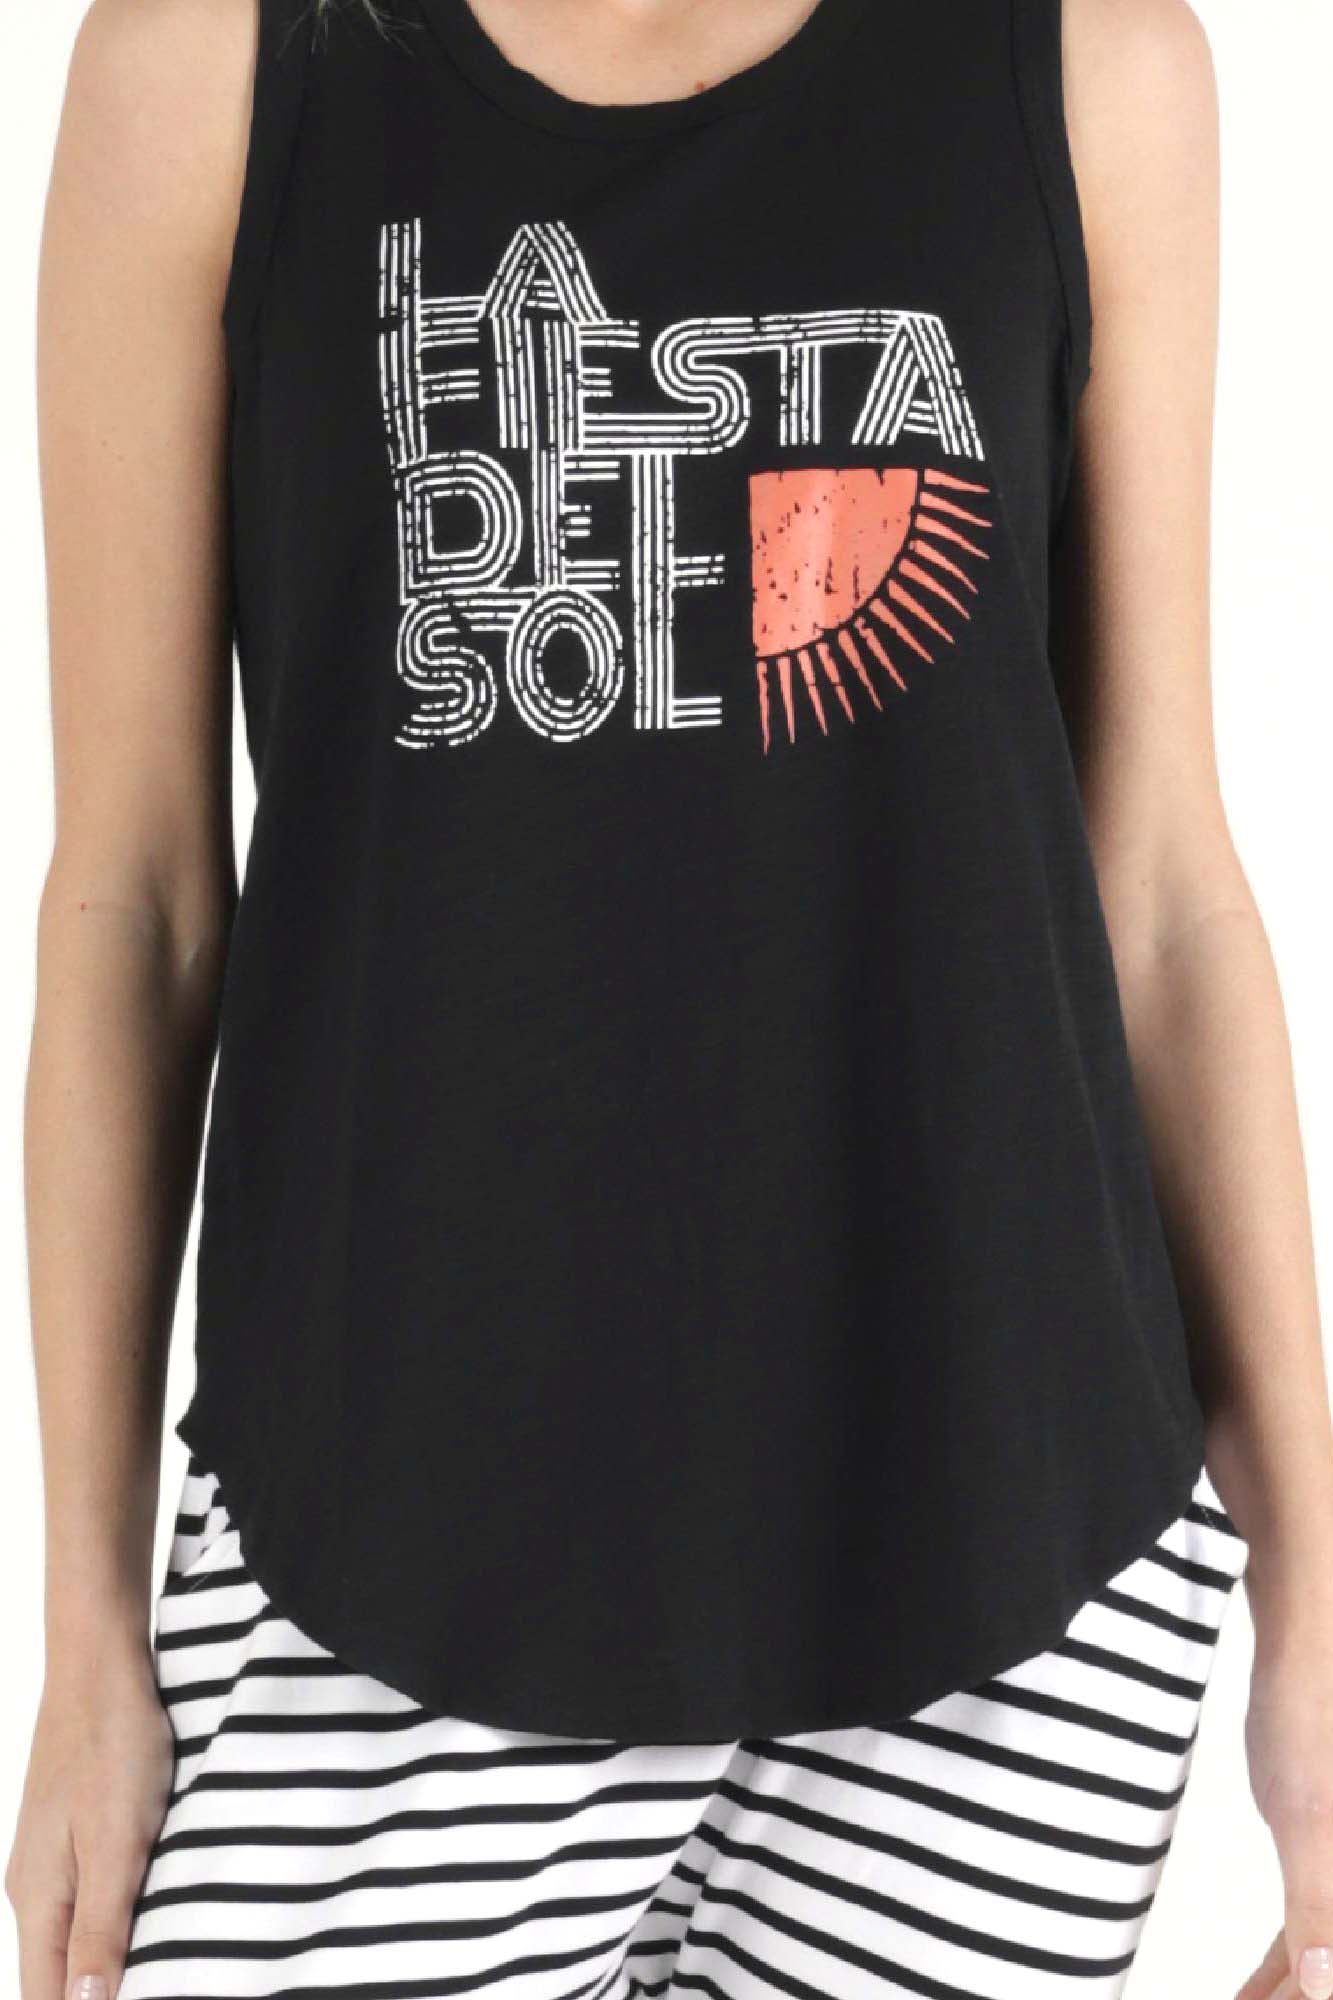 Betty Basics Keira Tank in Black with Fiesta Print - Hey Sara